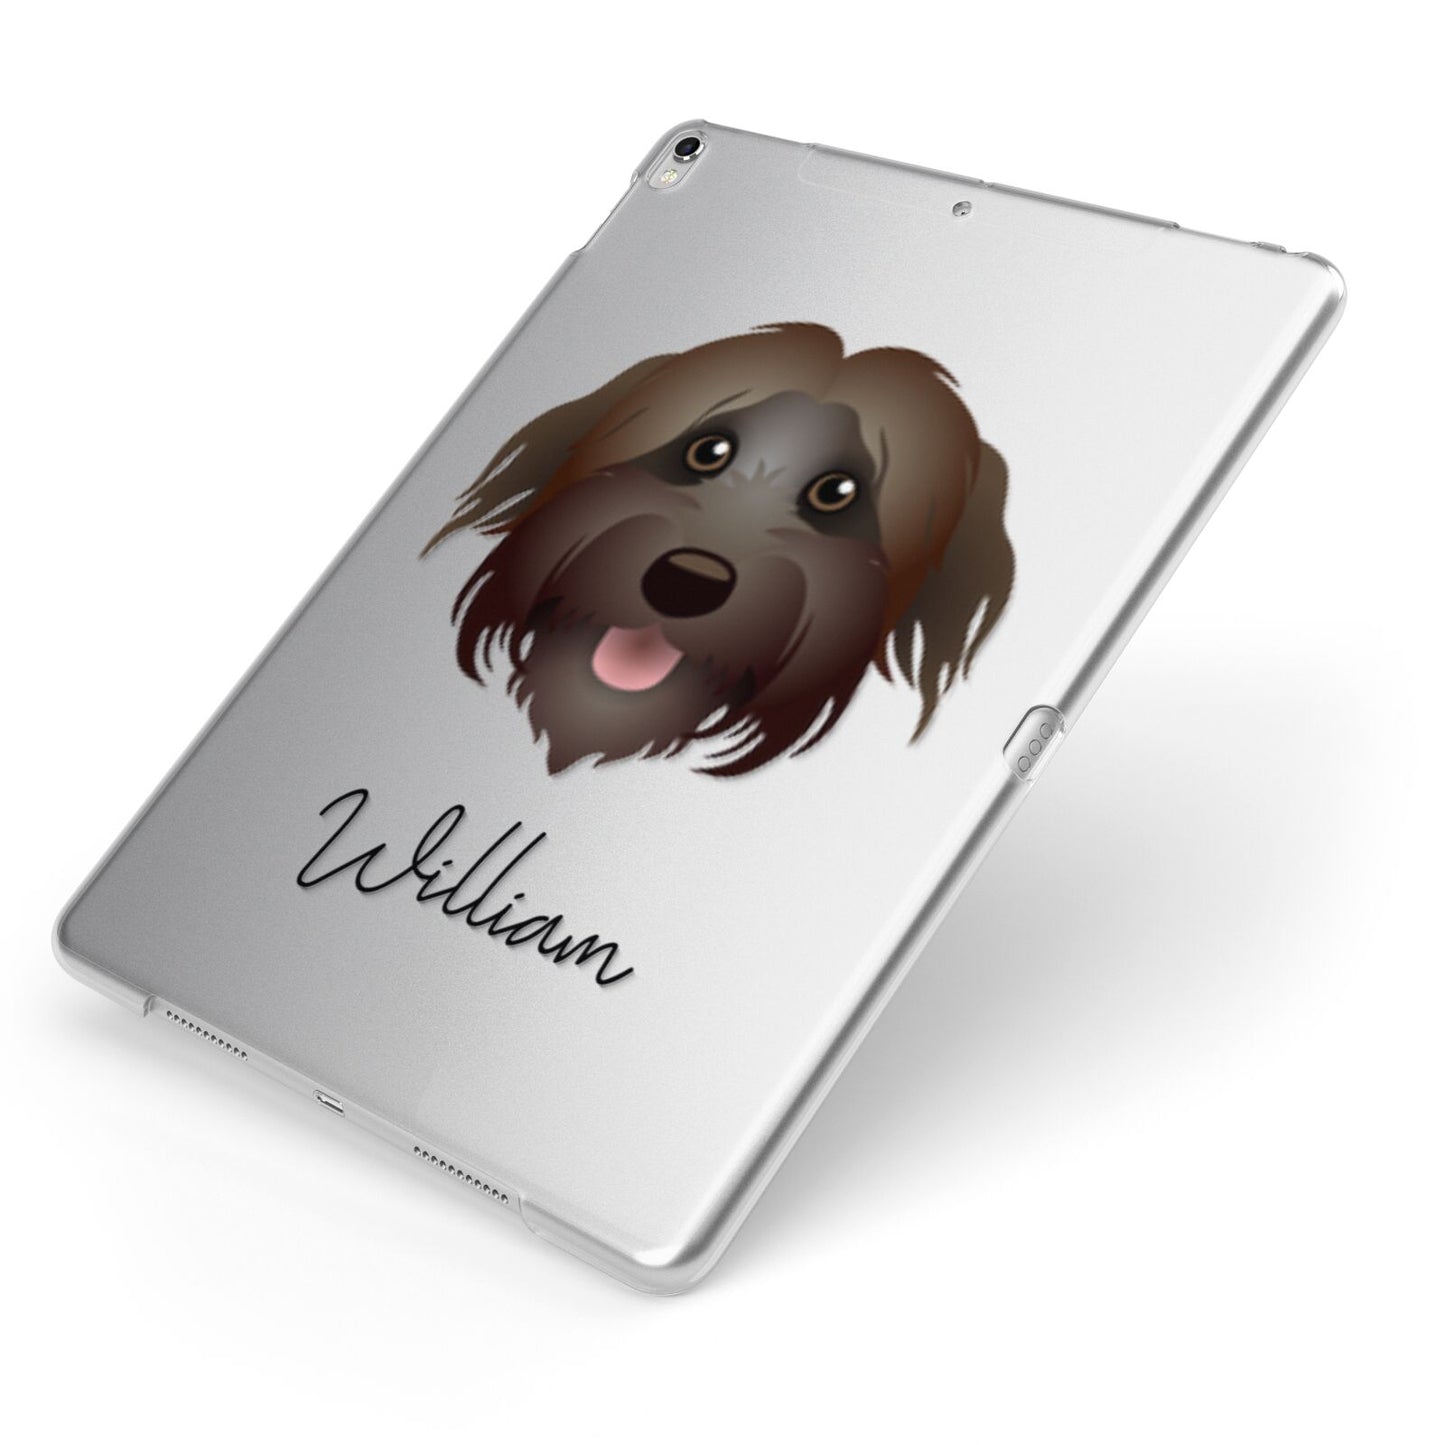 Pyrenean Shepherd Personalised Apple iPad Case on Silver iPad Side View